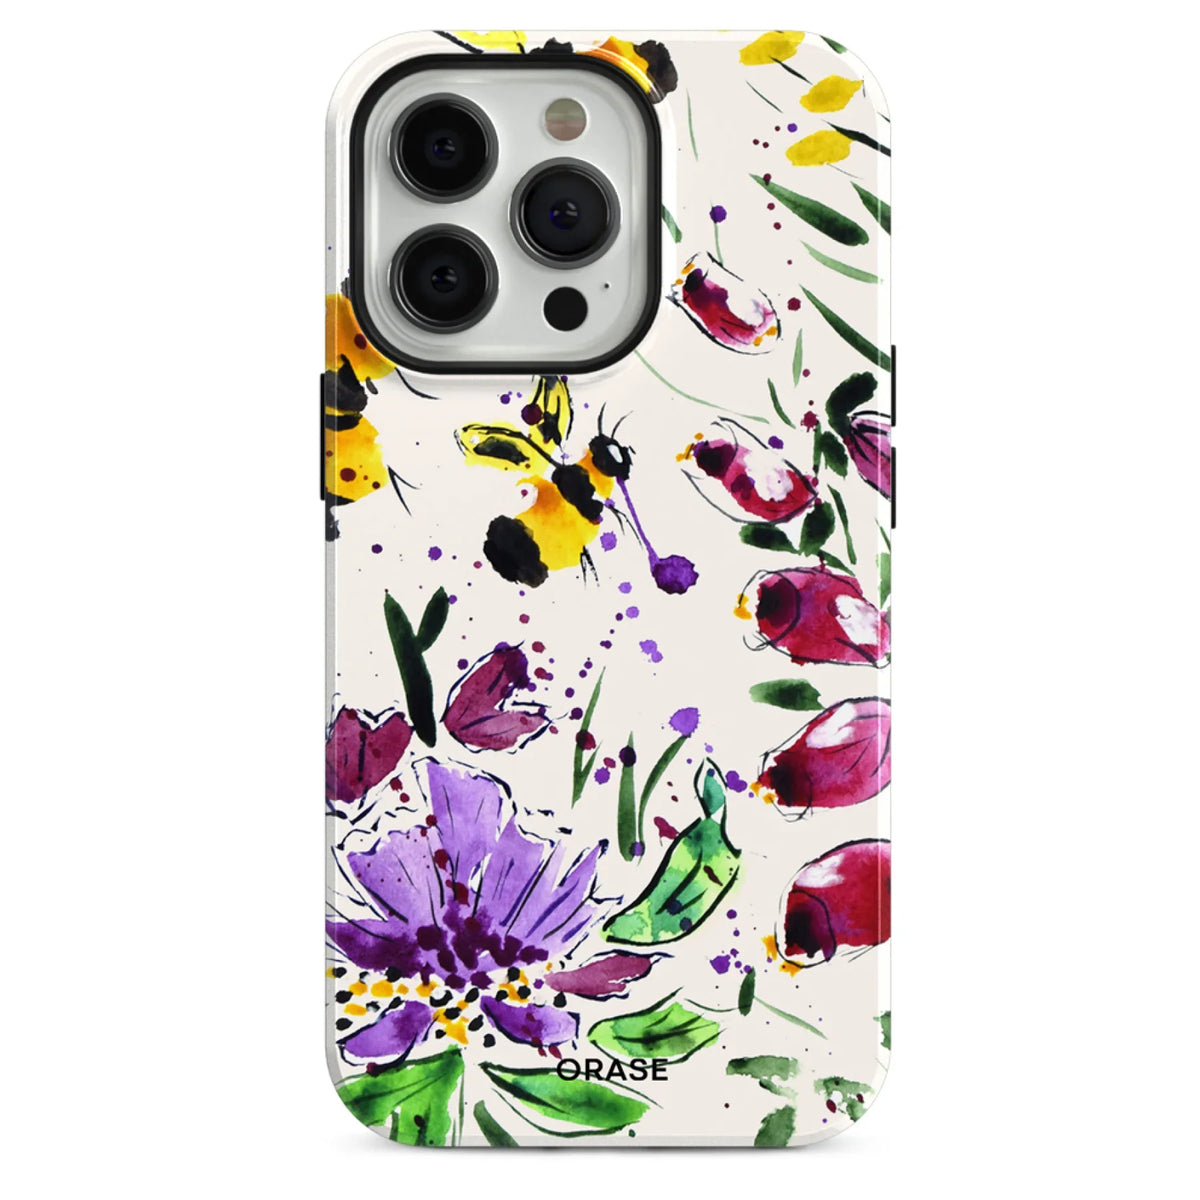 Floral Flight iPhone Case - iPhone 12 Mini